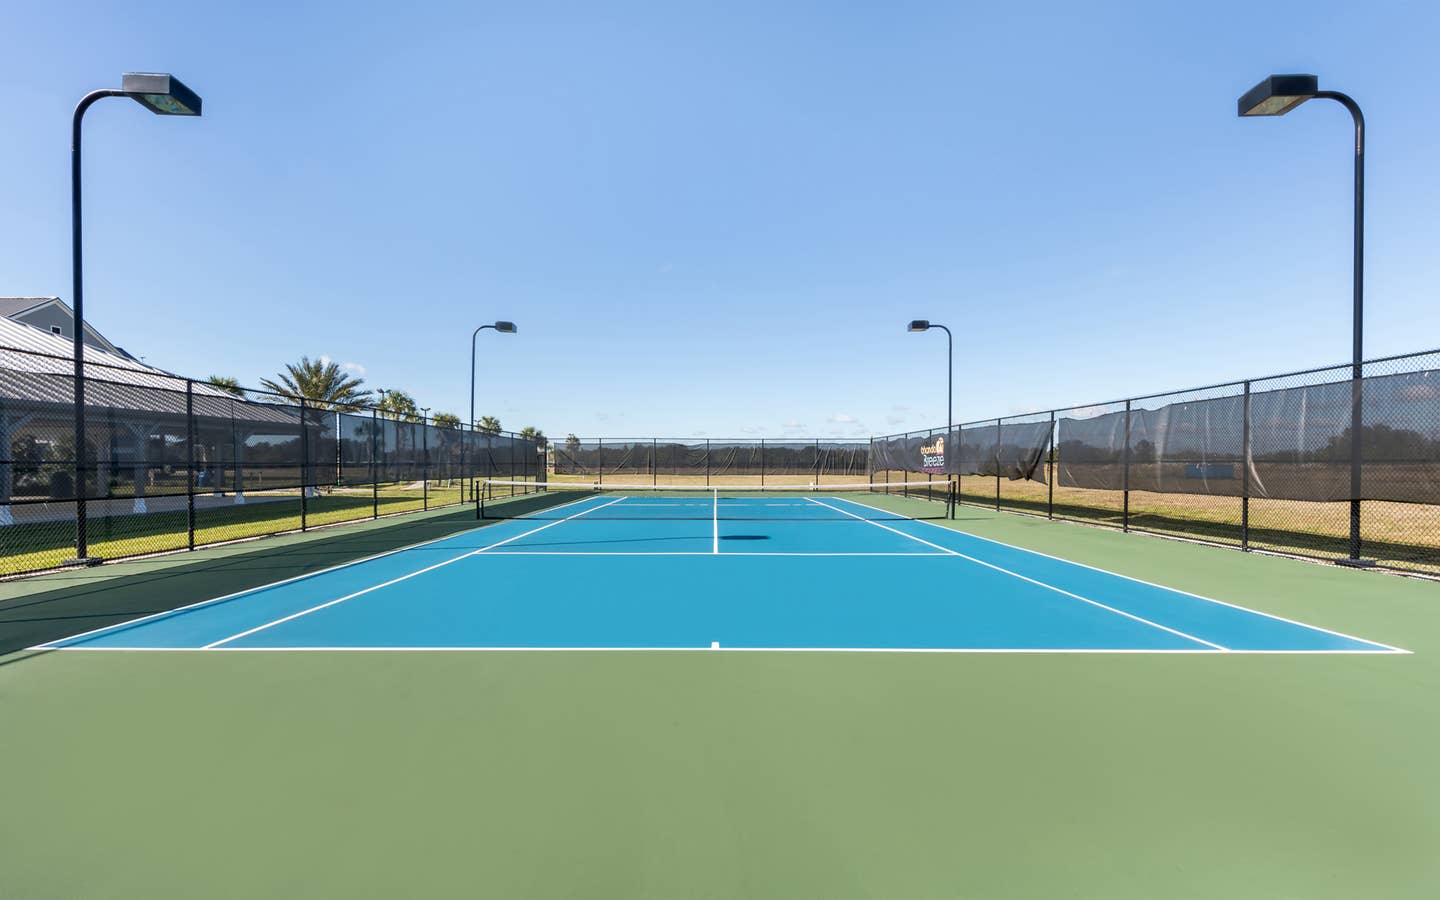 Outdoor tennis court at Orlando Breeze Resort near Orlando, Florida.